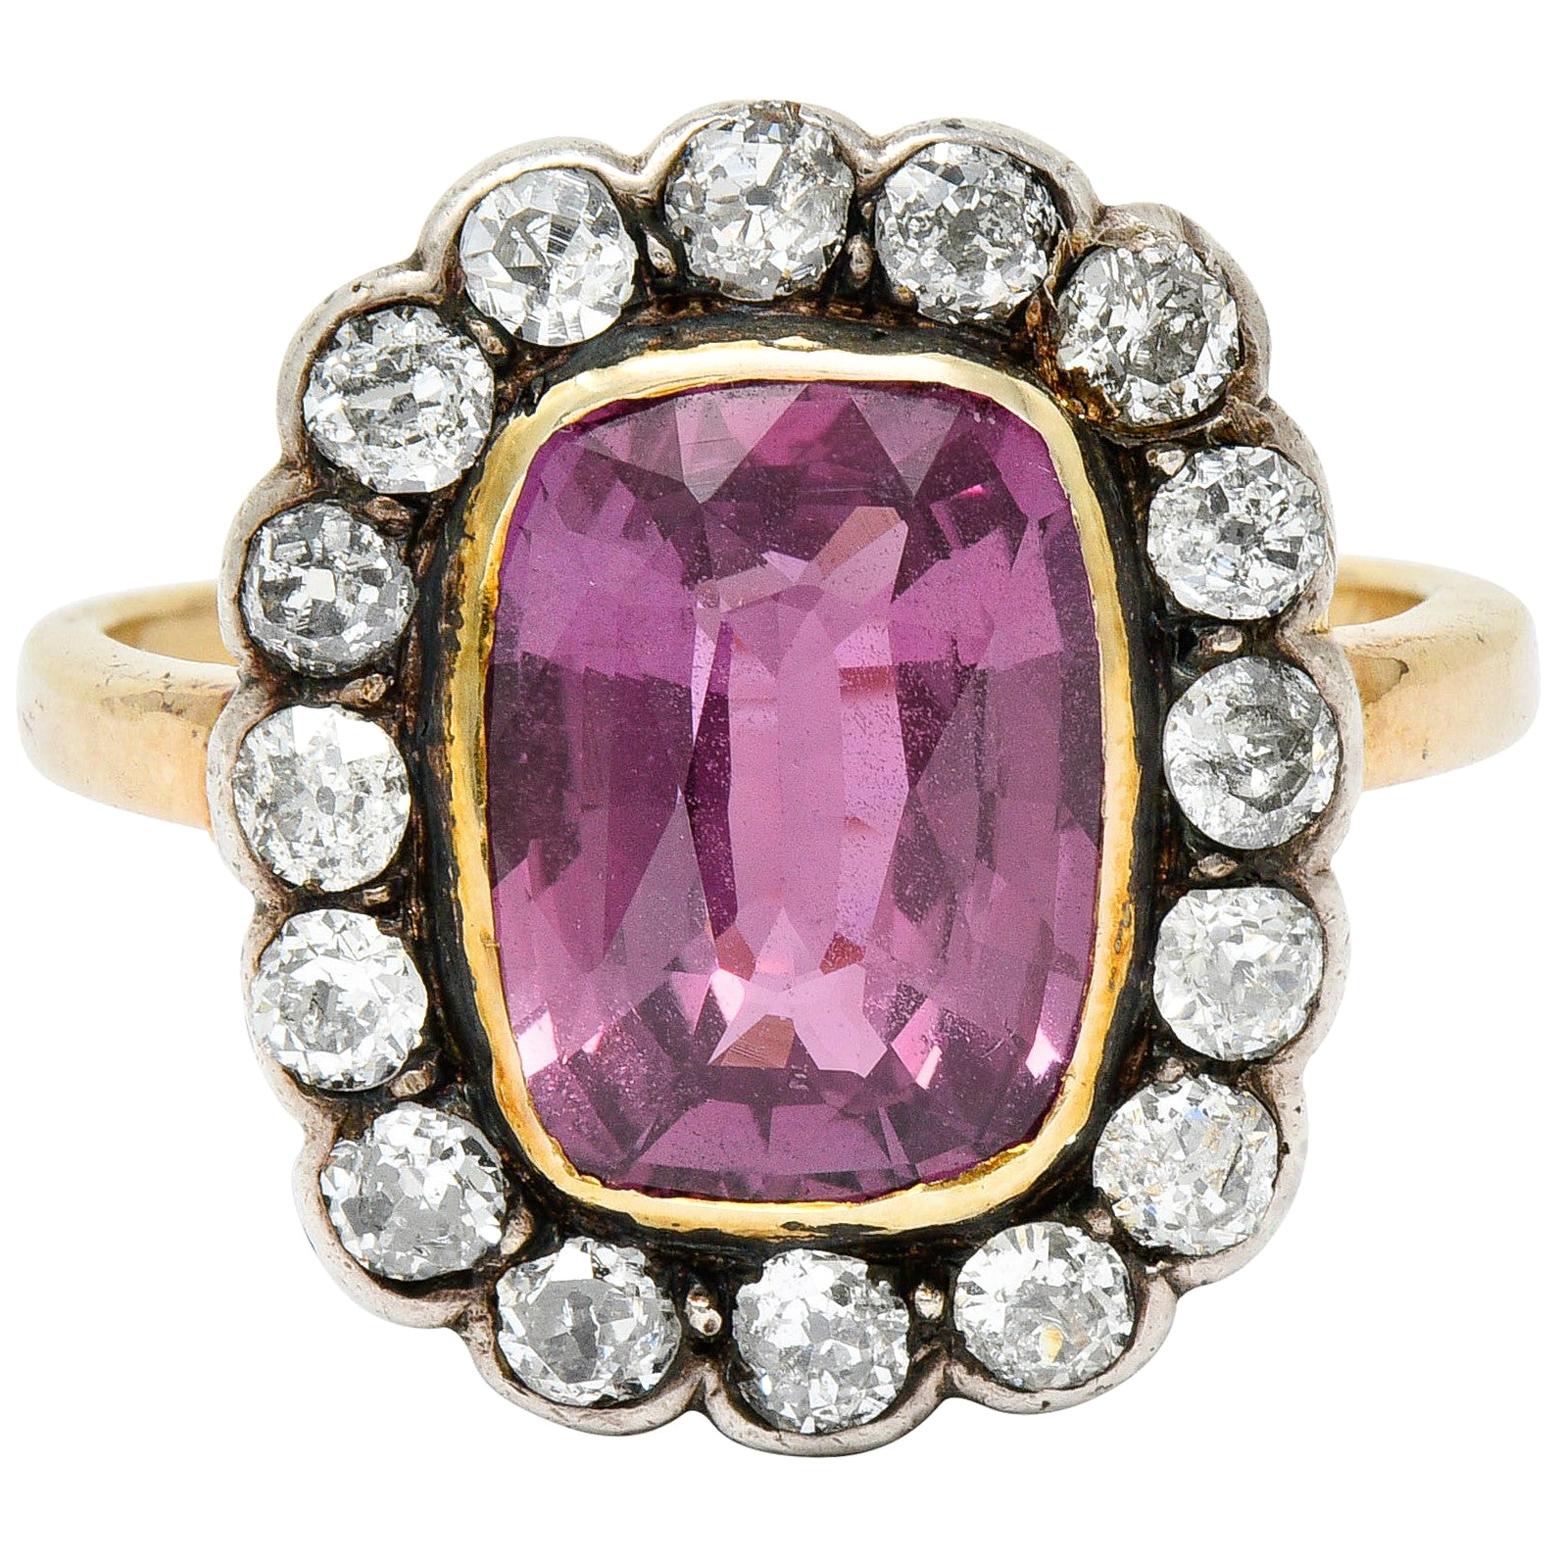 Victorian 4.95 Carat Pink Sapphire Diamond Silver 14 Karat Gold Cluster Ring